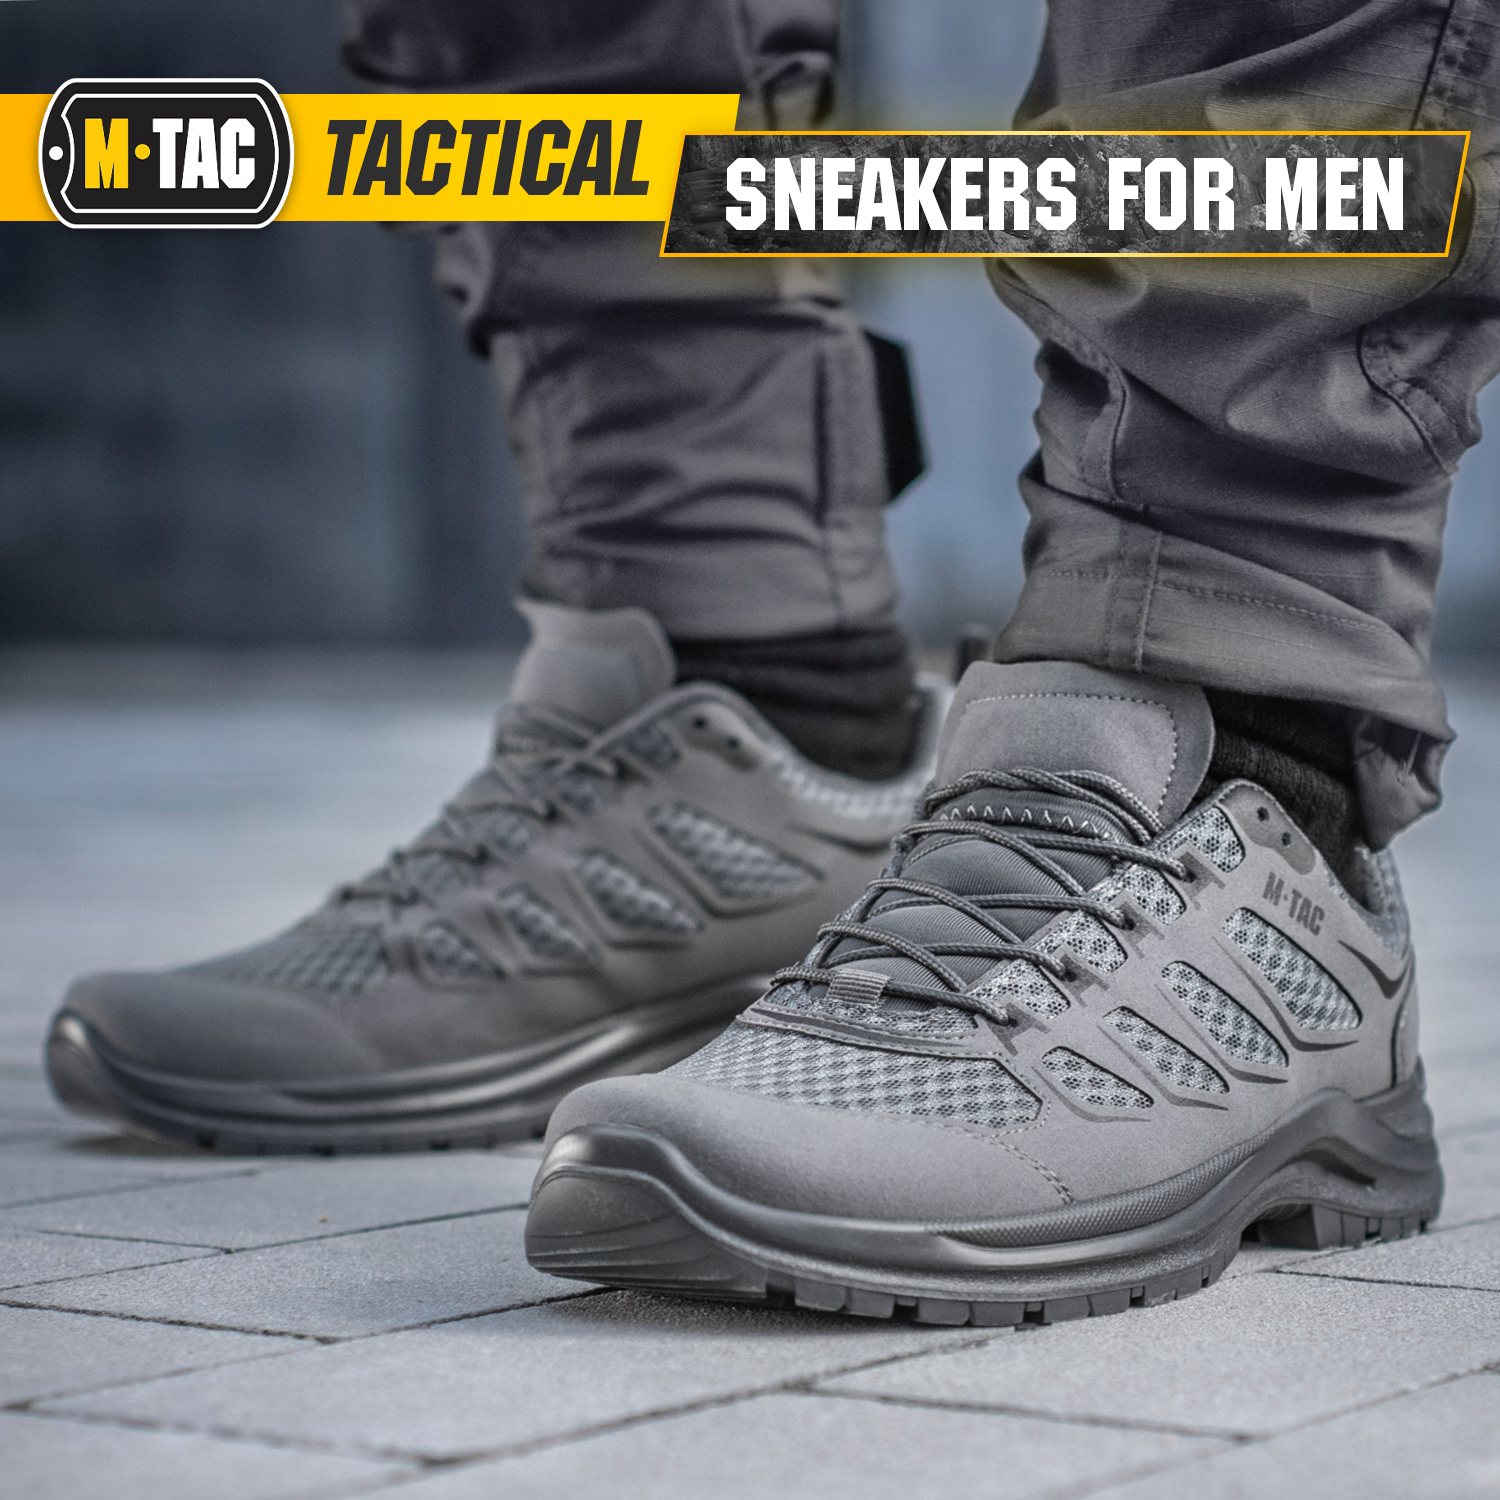 M-Tac Tactical Sneakers IVA